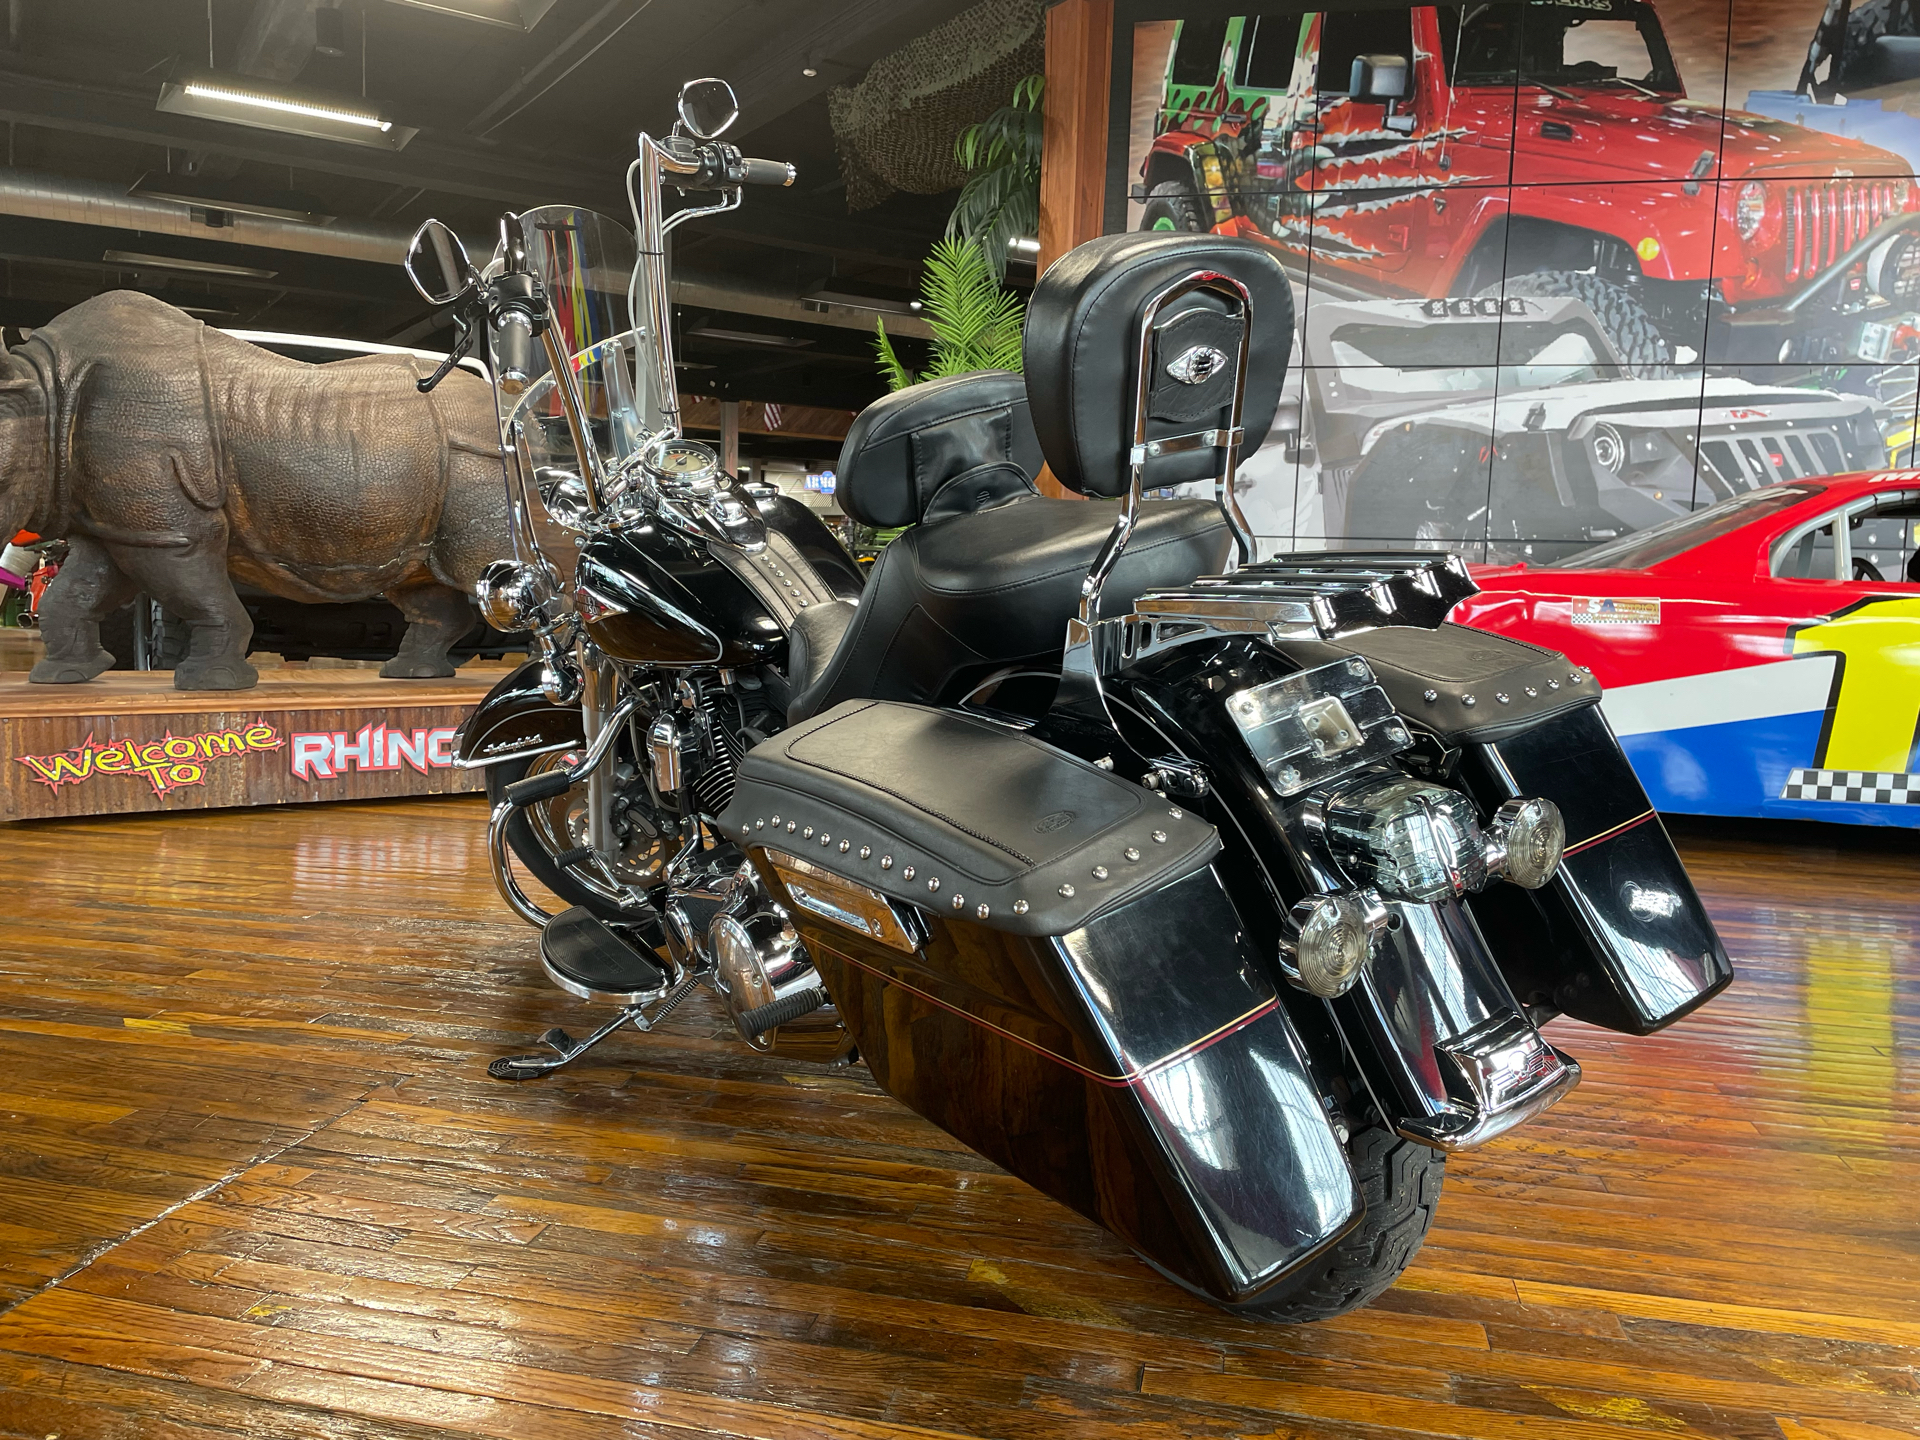 2014 Harley-Davidson Heritage Softail® Classic in Laurel, Mississippi - Photo 4